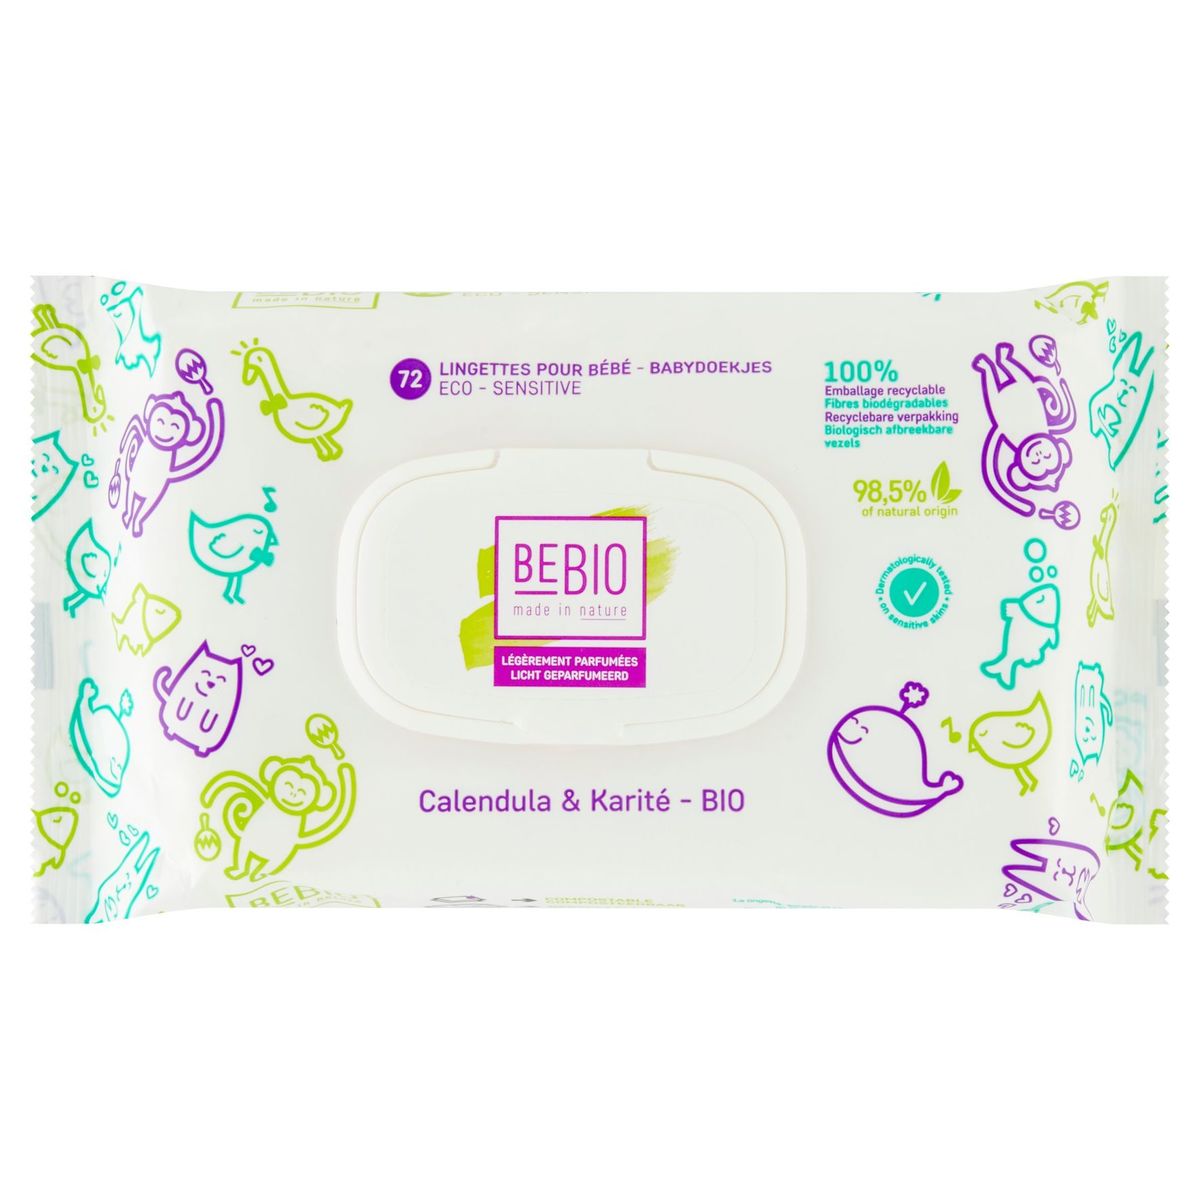 Bebio Lingettes Bébé Eco Sensitive Calendula & Karité Bio 72 Pièces